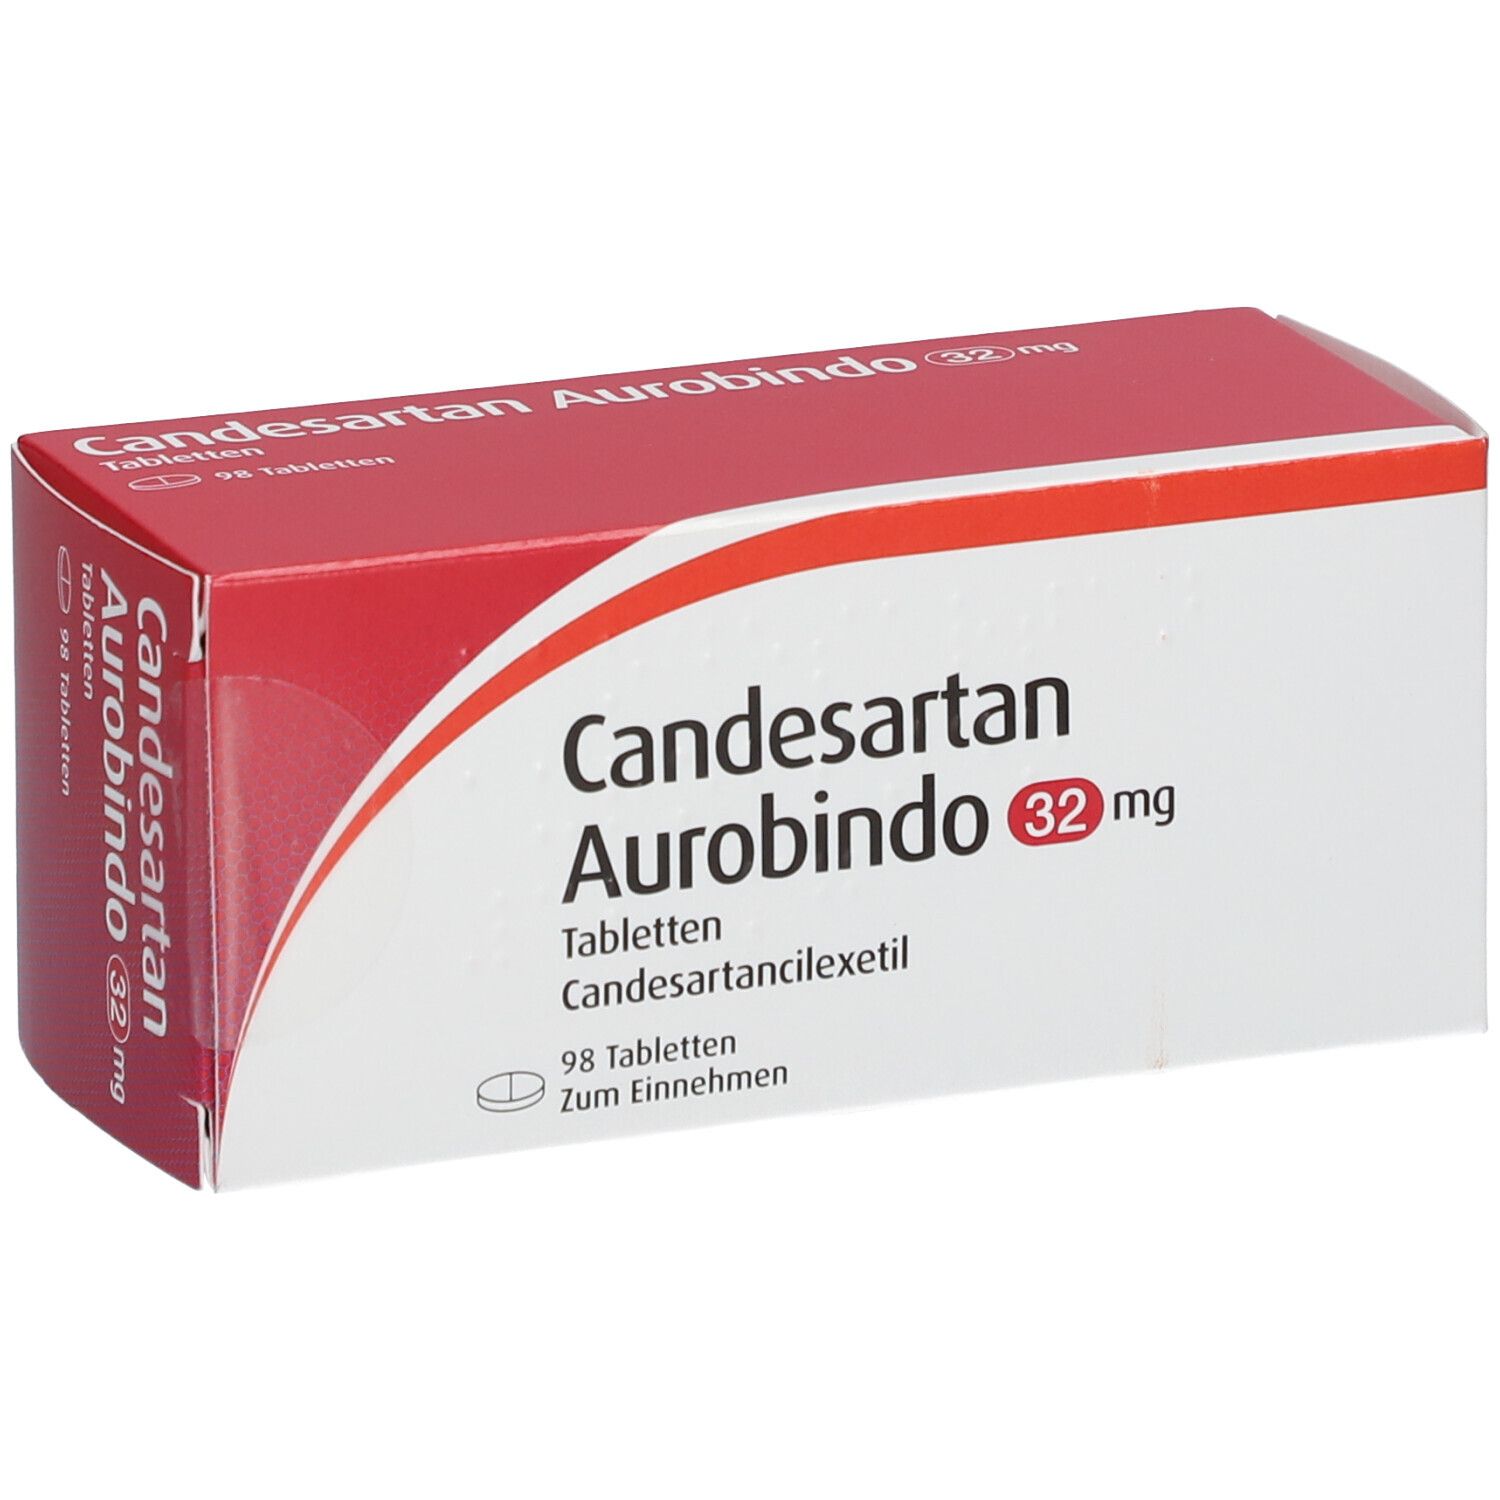 Candesartan Aurobindo 32 mg